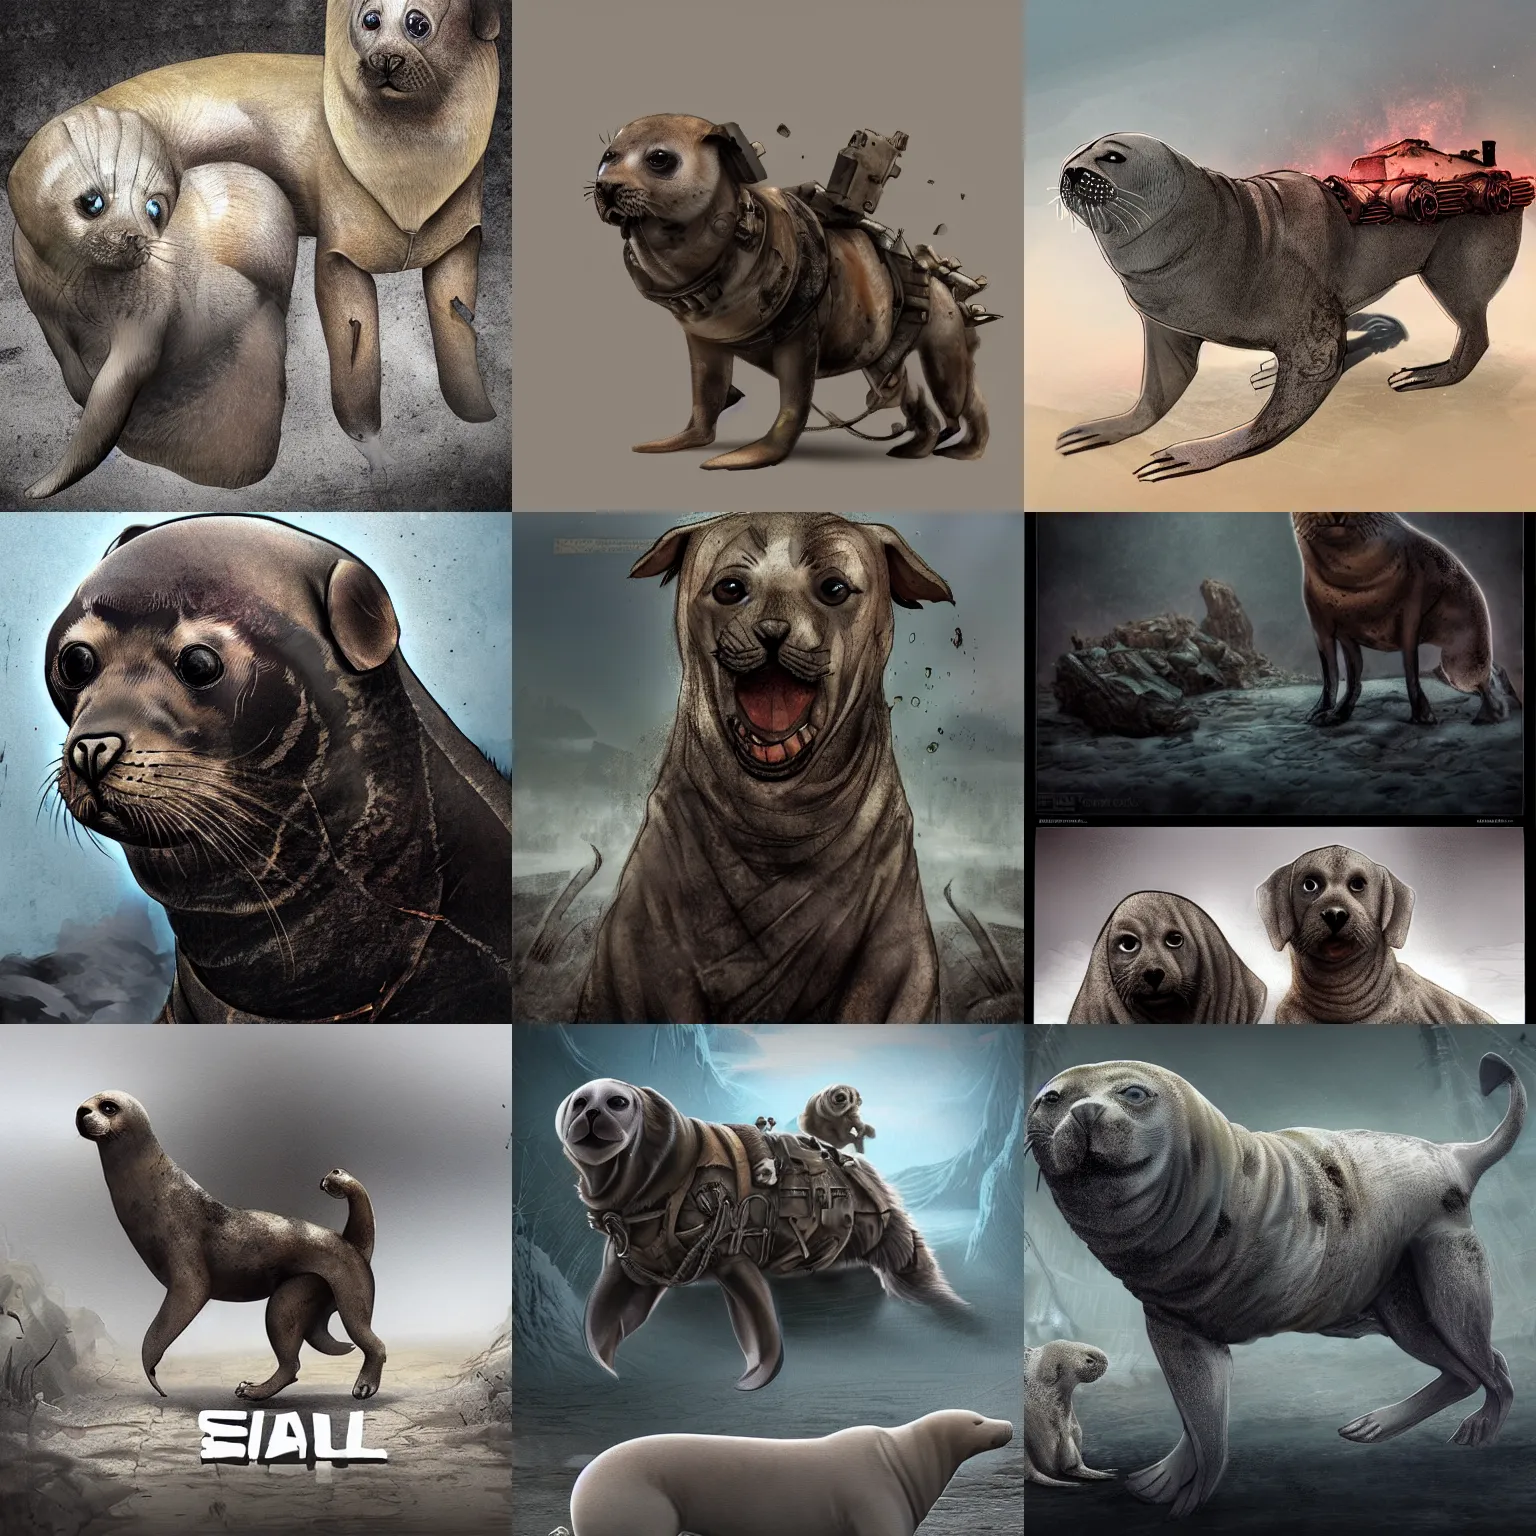 Prompt: seal dog chimera, post apocalyptic, award winning digital art, featured on artstation